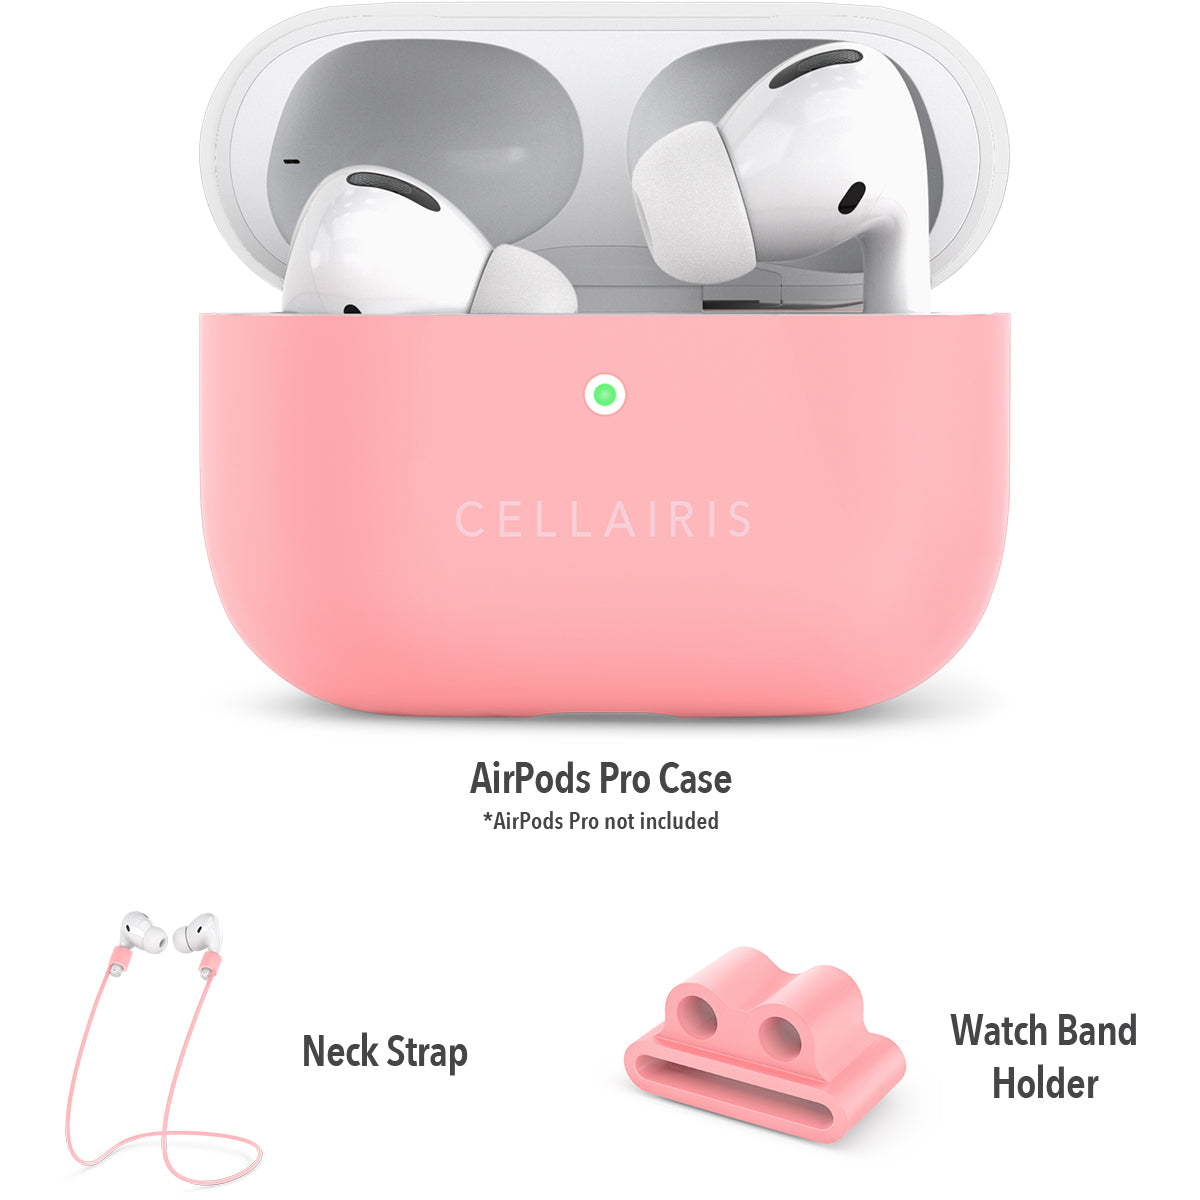 AirPod Pro Silicone Skin White/Pink AirPod Cases